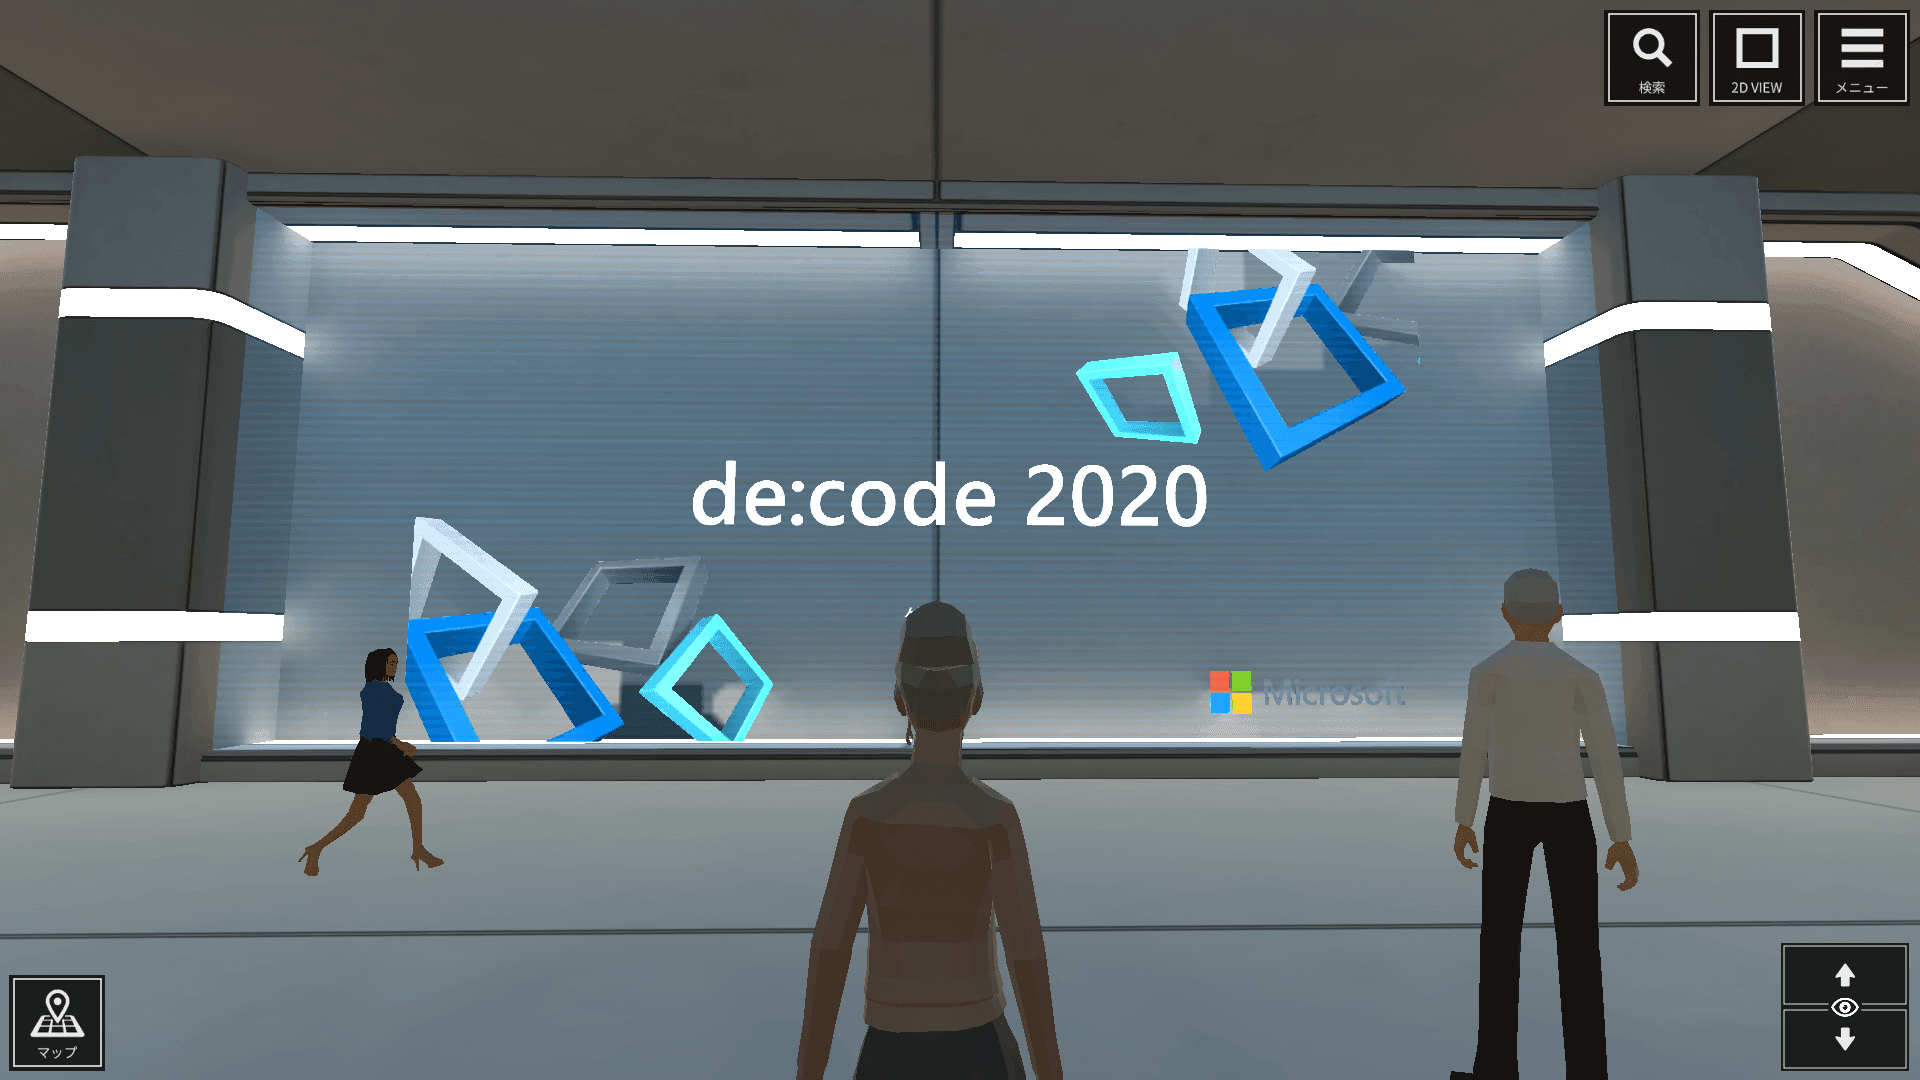 2020_0616_001_fixer_virtual_event_platform_decode_2020_002_lounge_001.png